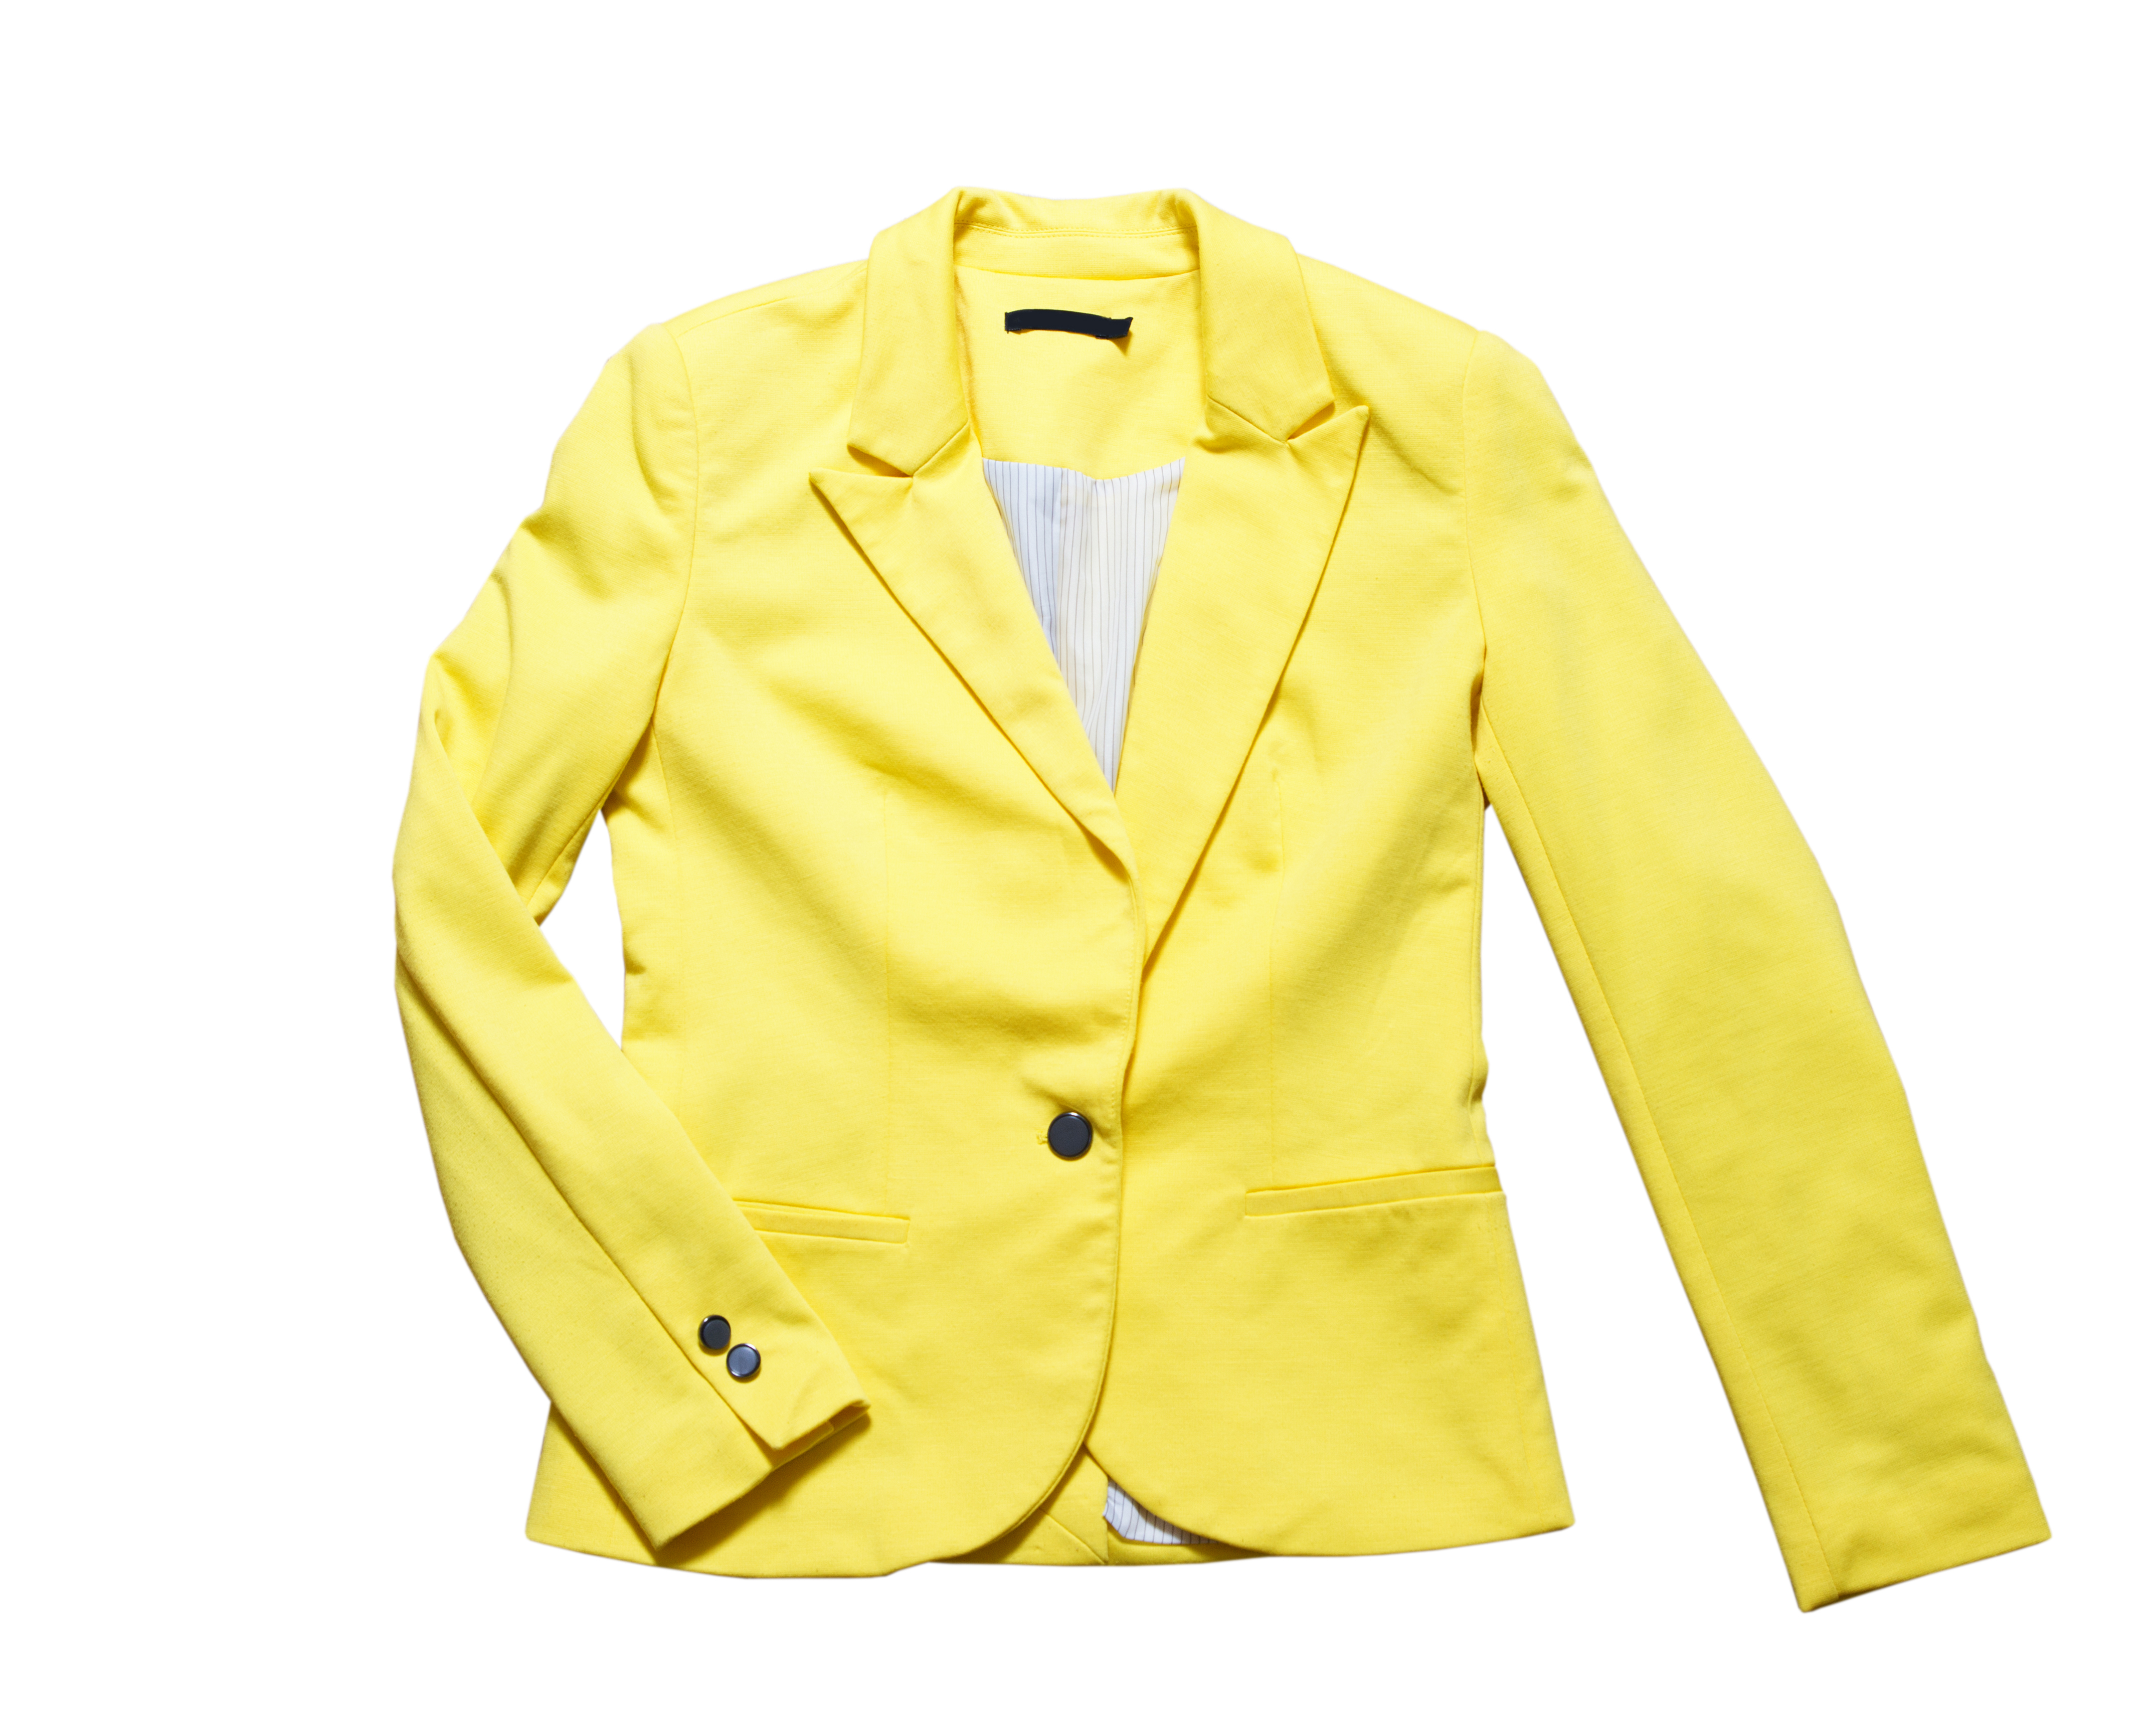 Une veste jaune classique | Source : Shutterstock